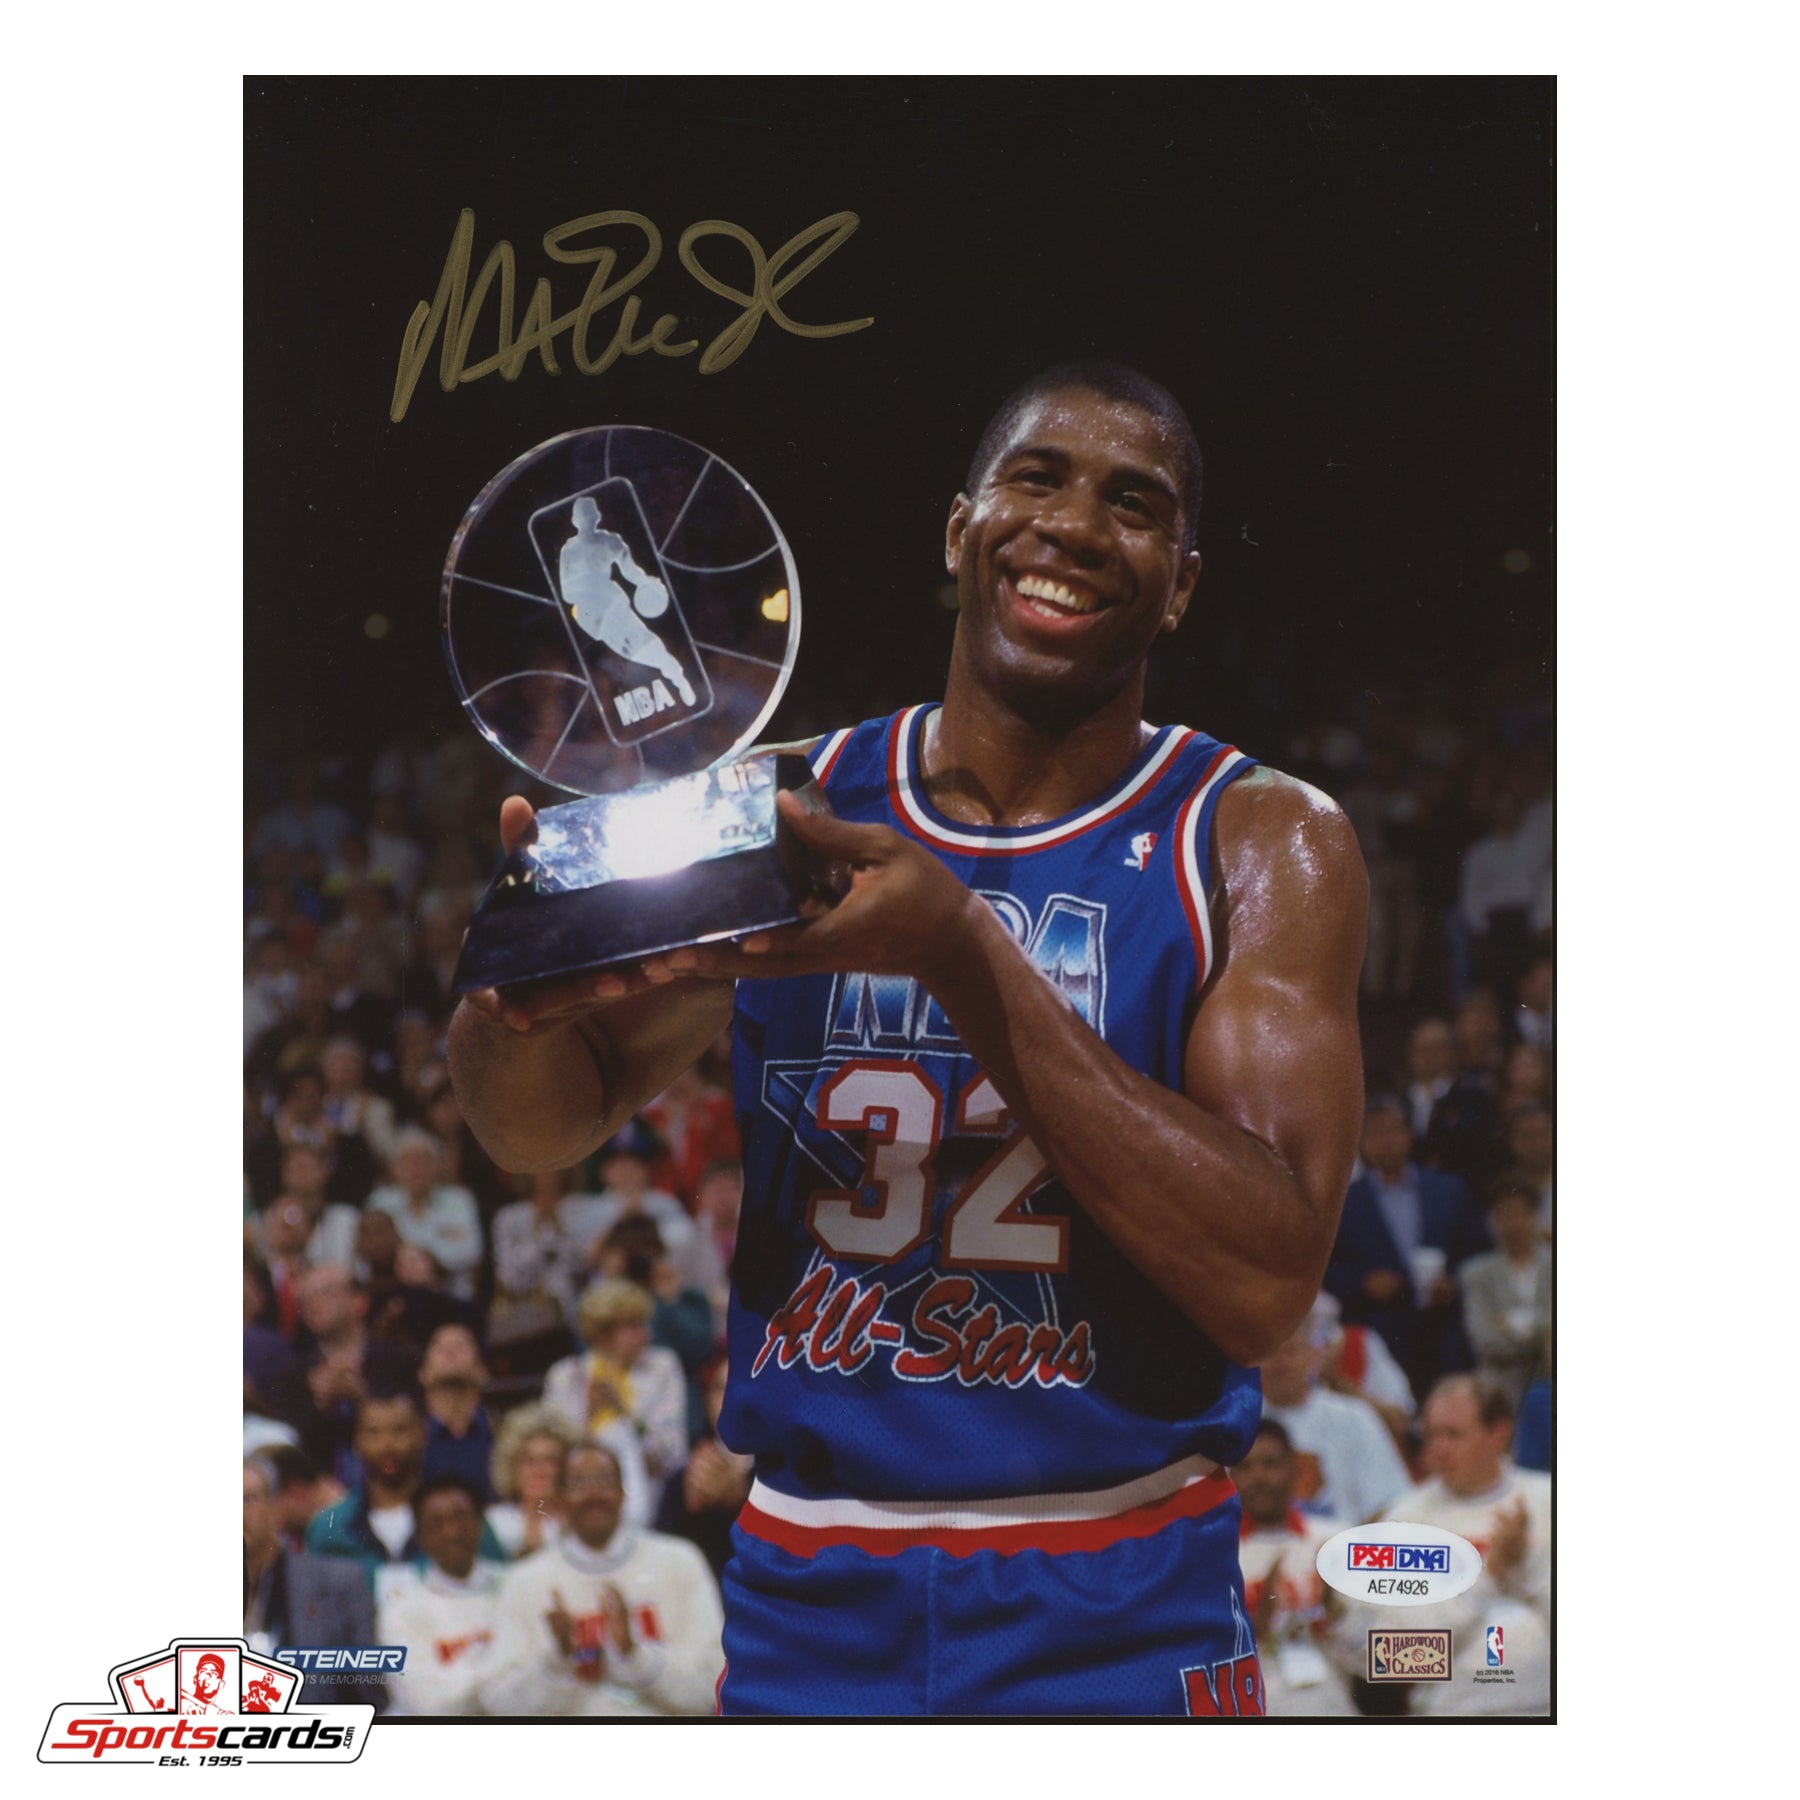 Magic Johnson Signed 1992 NBA All-Star Game 8x10 Photograph - PSA COA